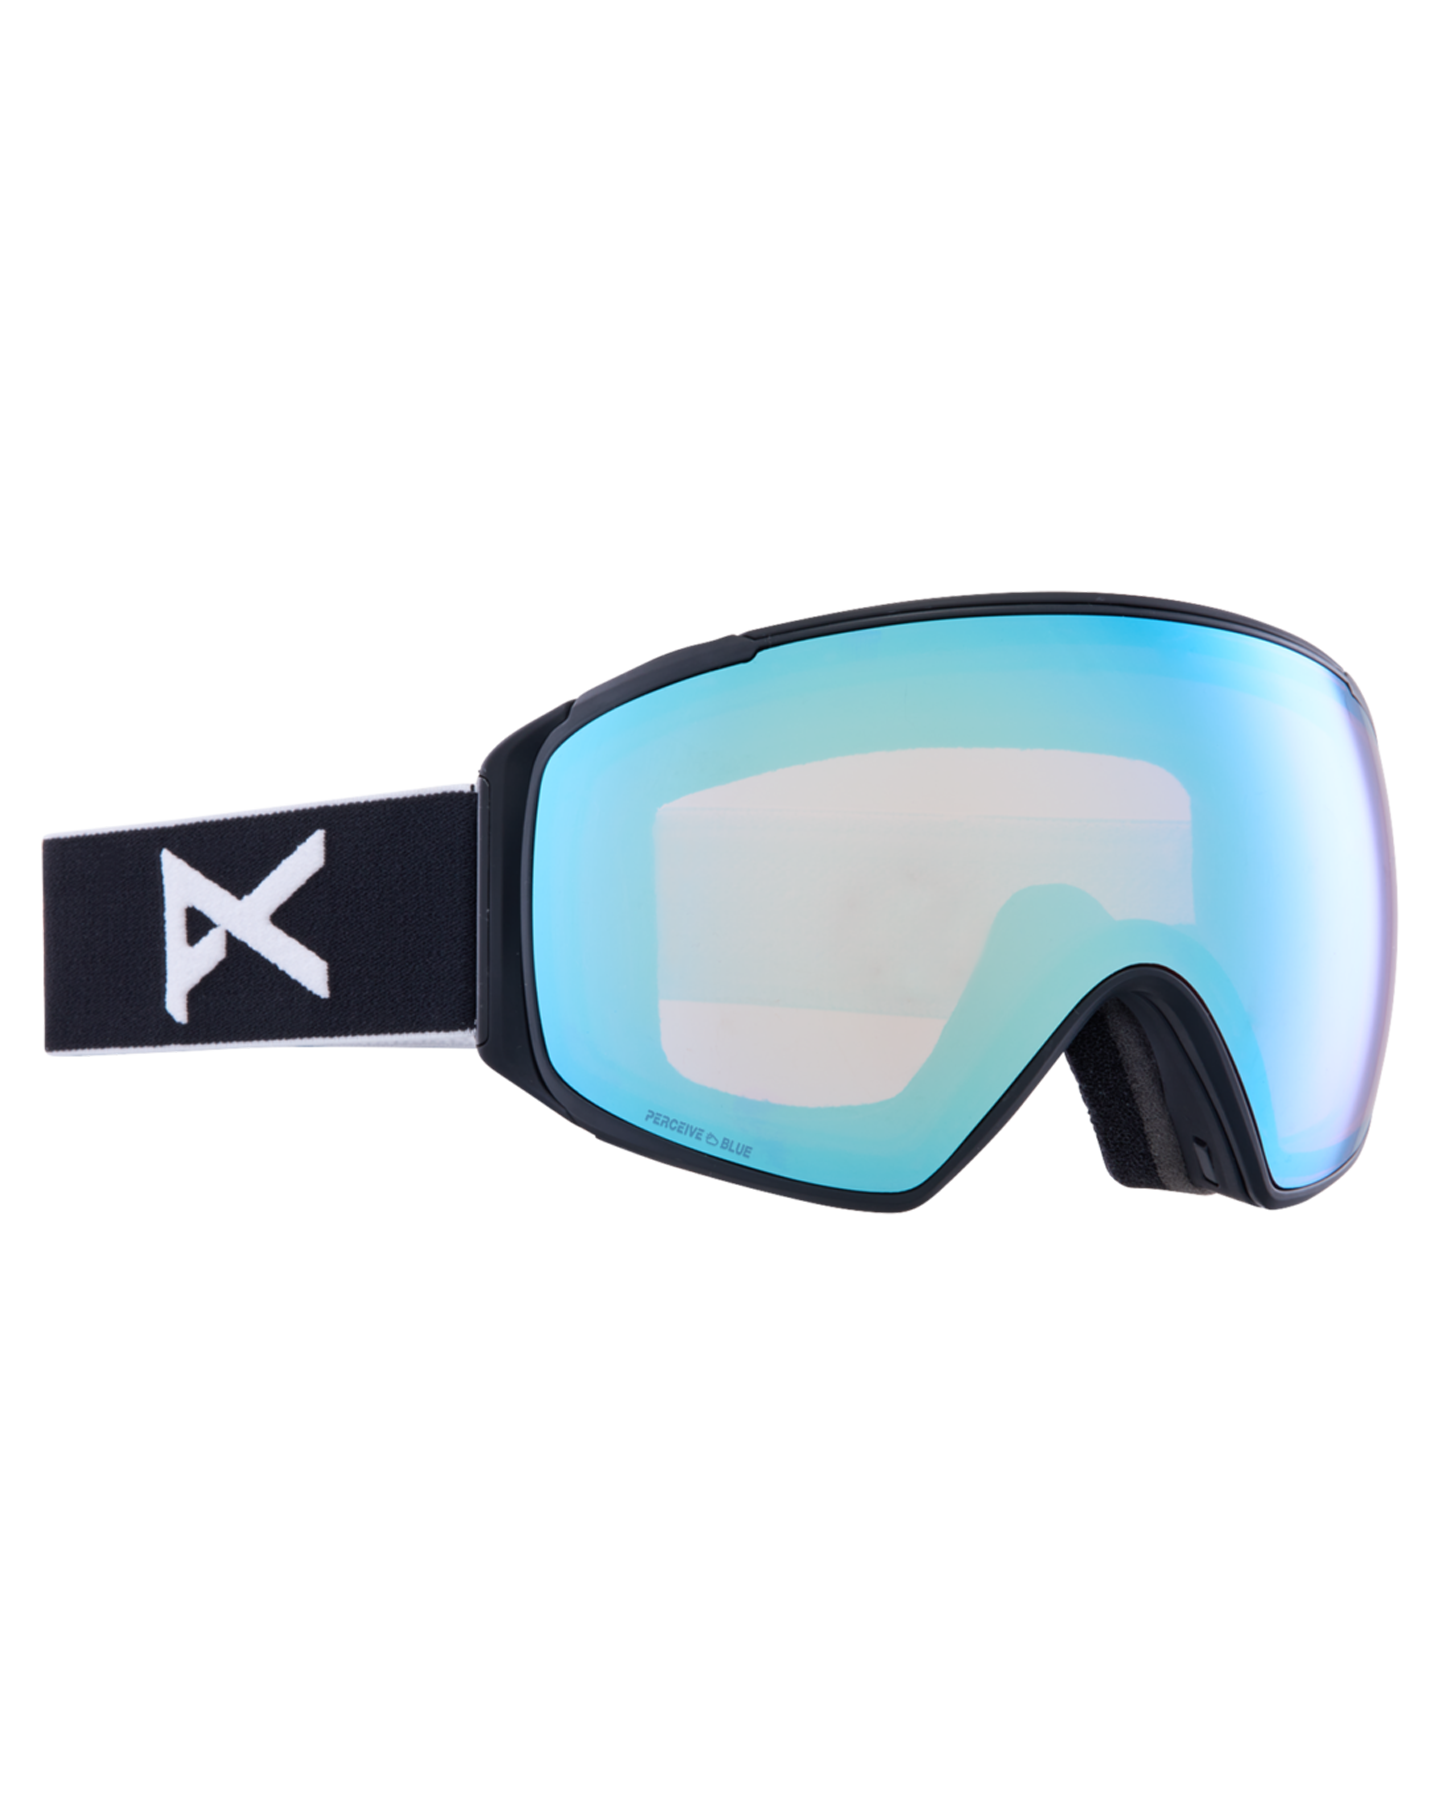 Anon M4S Toric Snow Goggles + Bonus Lens + MFI - Black / Perceive Variable Blue Men's Snow Goggles - SnowSkiersWarehouse